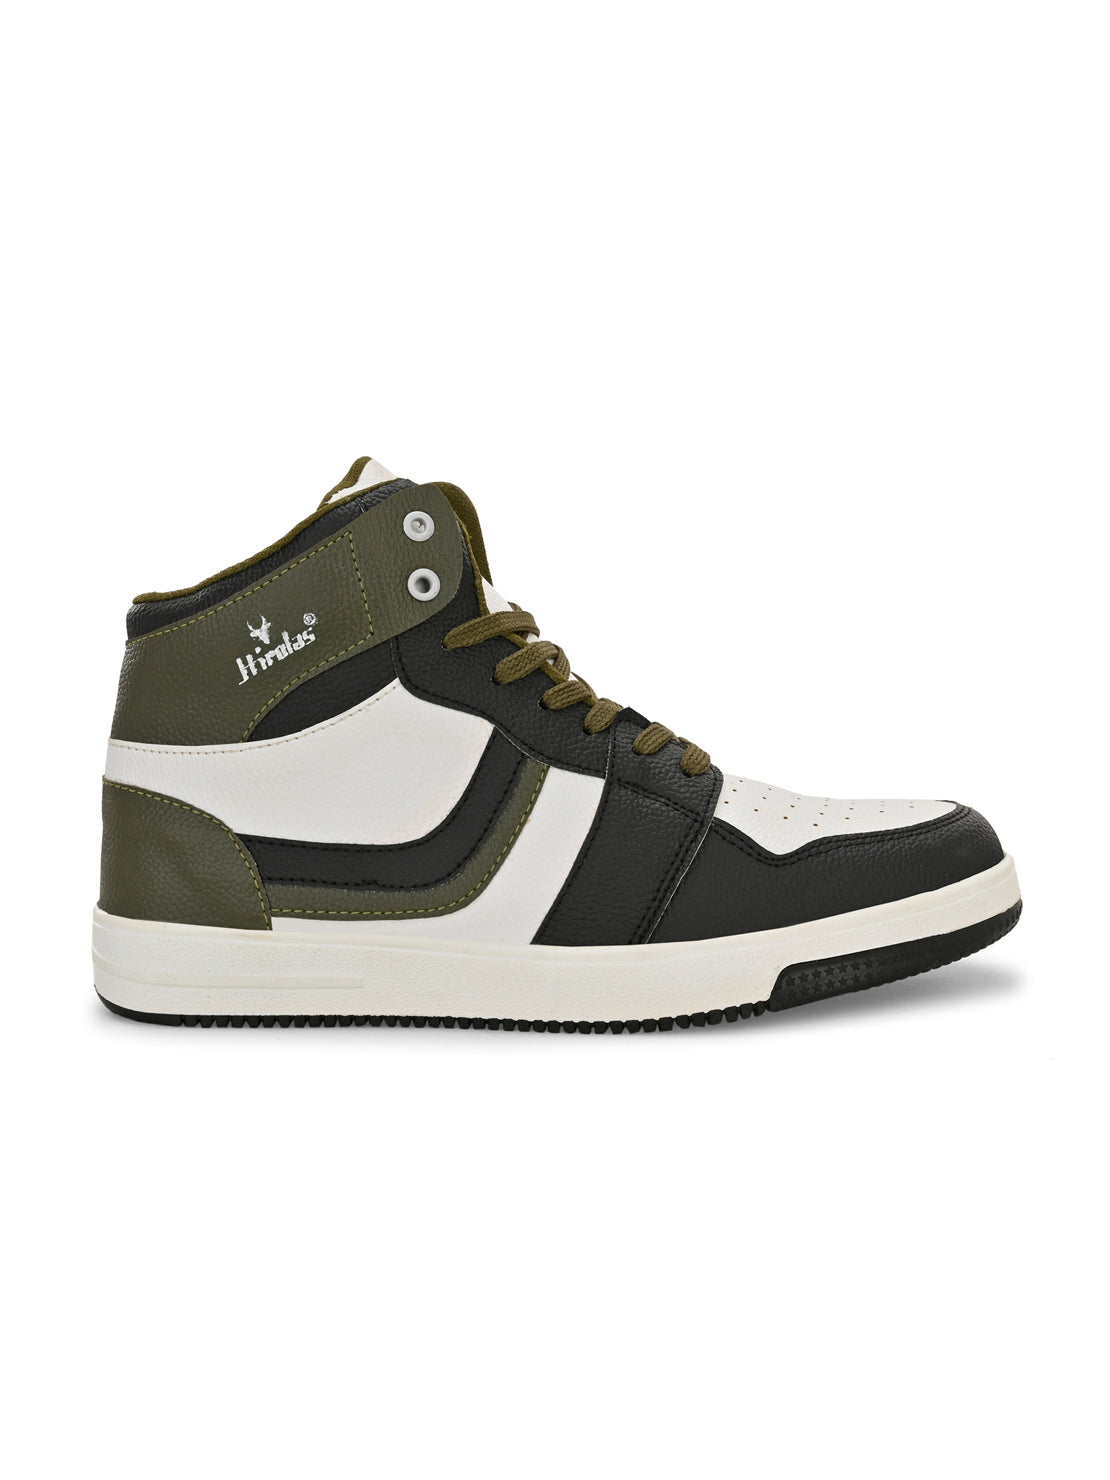 Hirolas® Men's Olive High Top Ankle Lace Up Sneaker Shoes (HRL2079WOG)